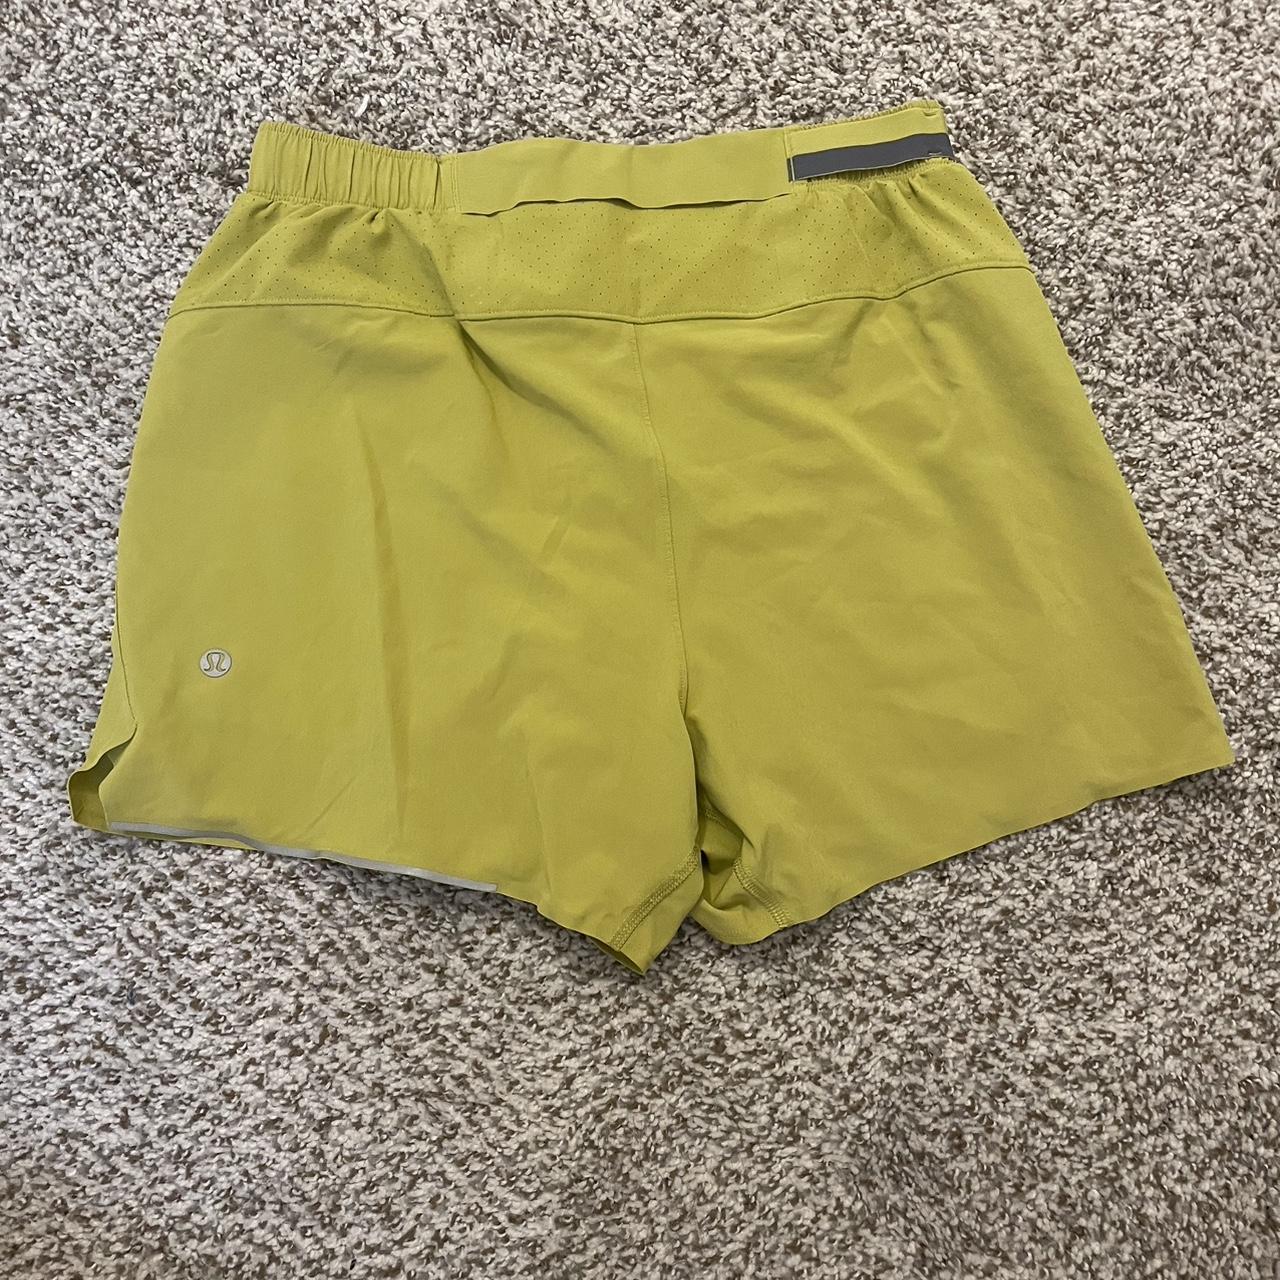 Lululemon Men's Yellow and Green Shorts (2)